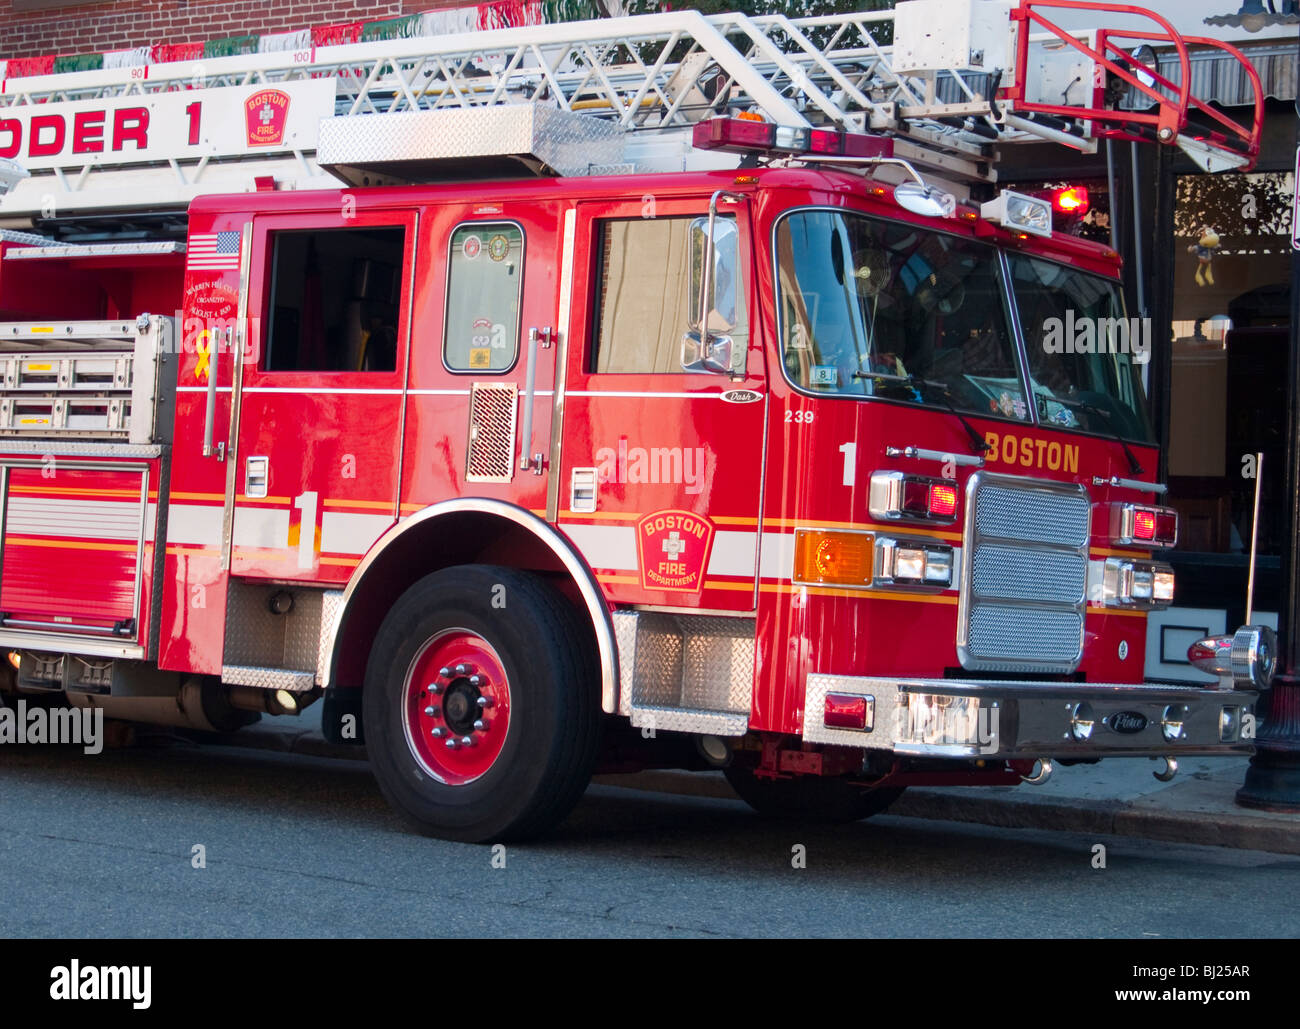 Ladder 1 Fire Truck in Boston Massachusetts USA Stock Photo